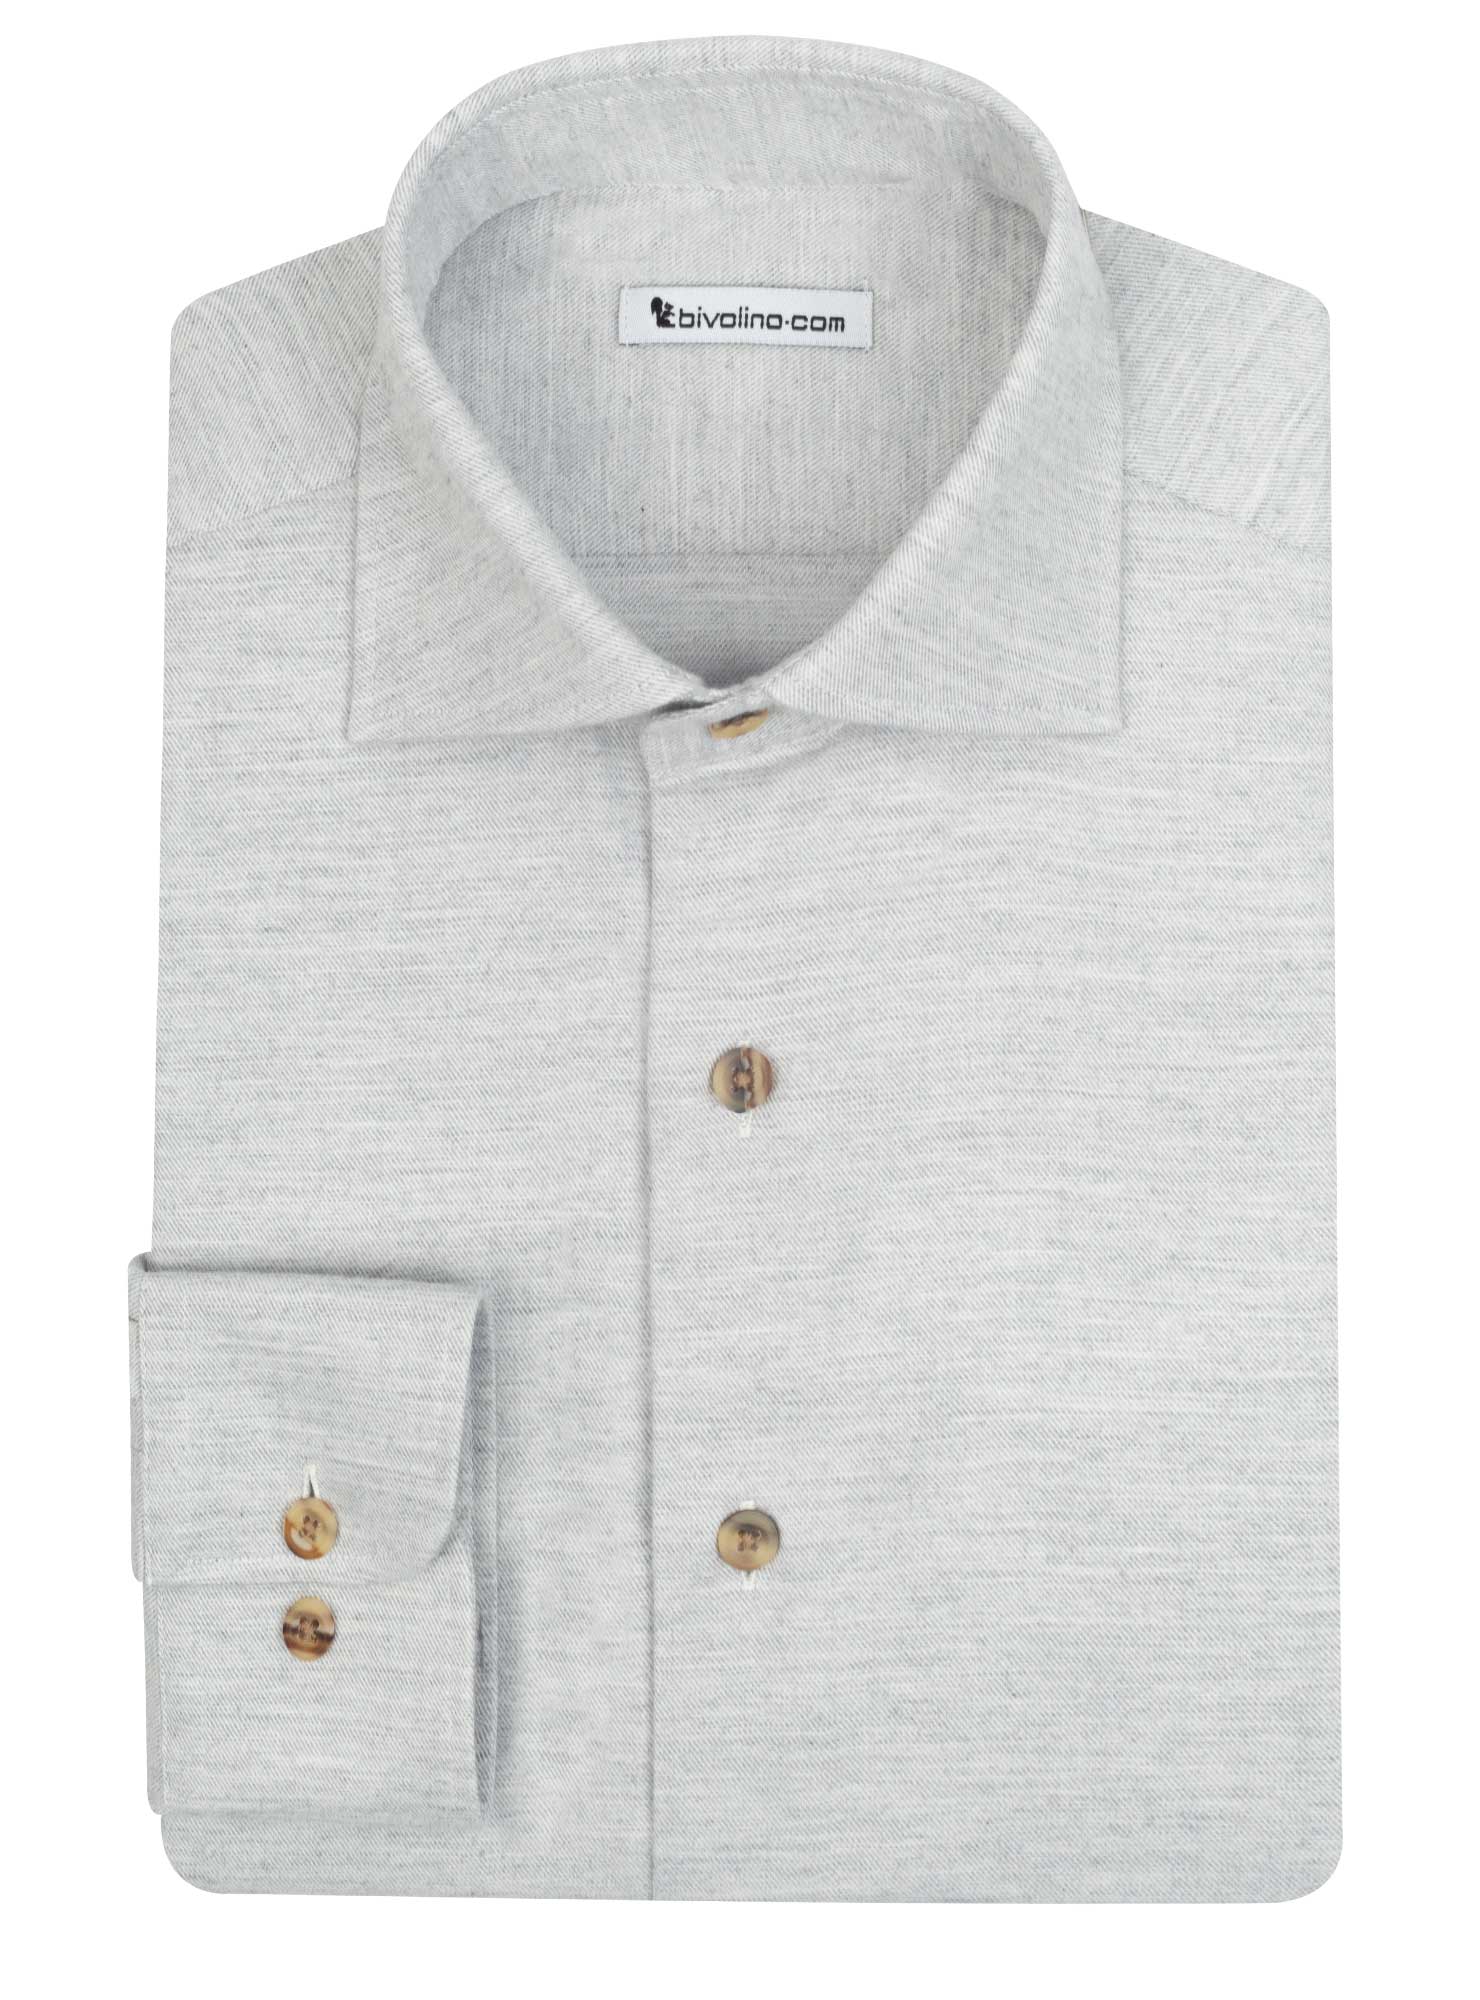 SALERNO - light grey Flannel twill  shirt - FLANEL 0